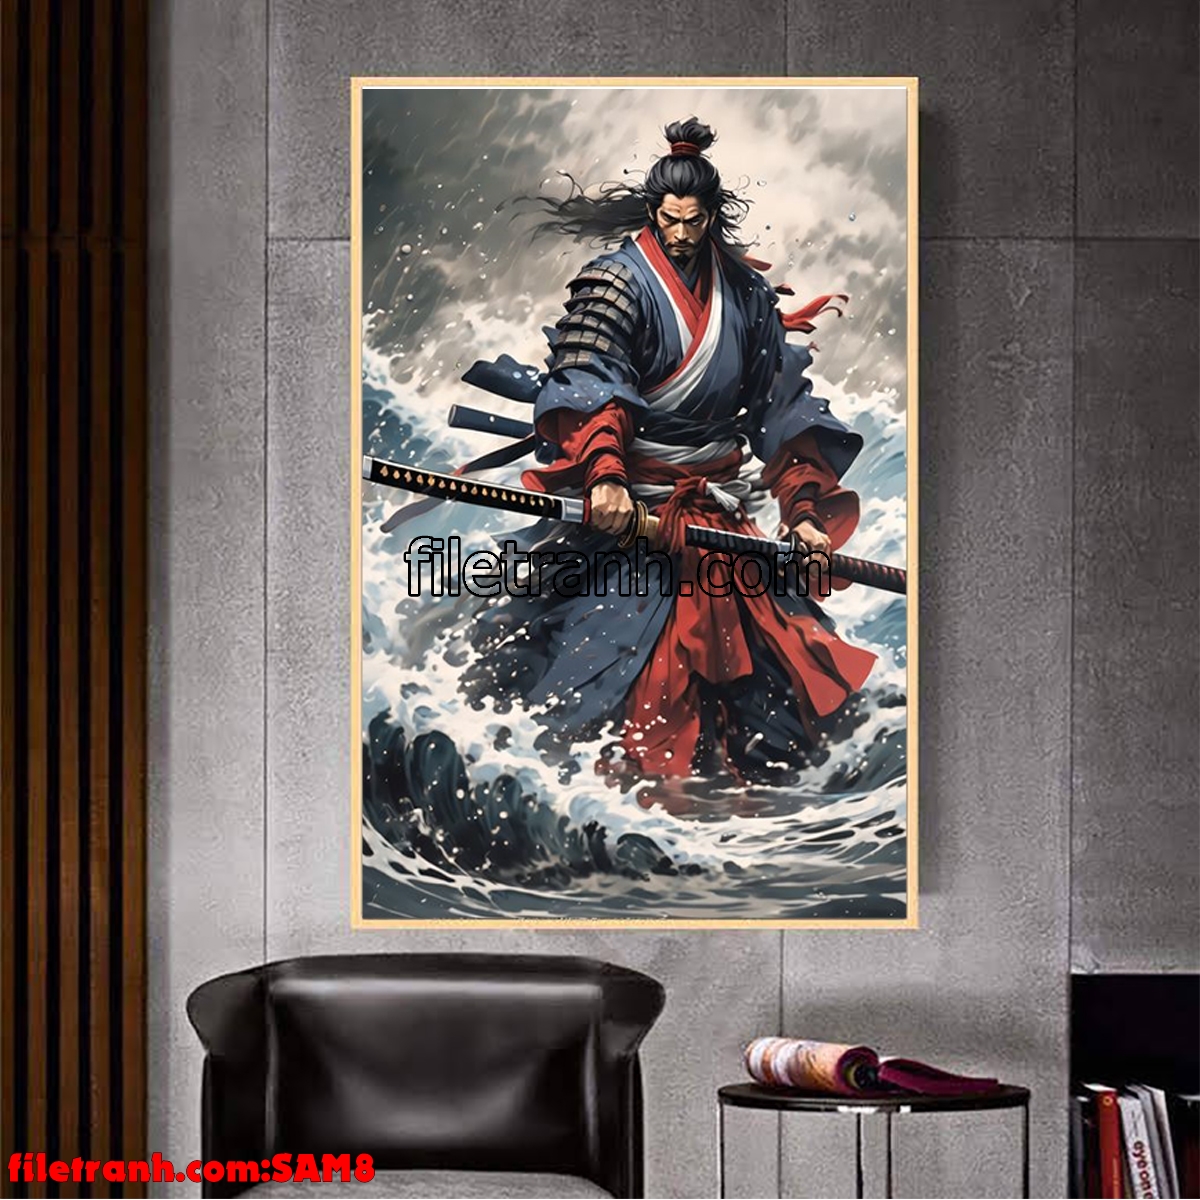 https://filetranh.com/tuong-nen/file-tranh-samurai-vo-si-nhat-ban-sam8.html